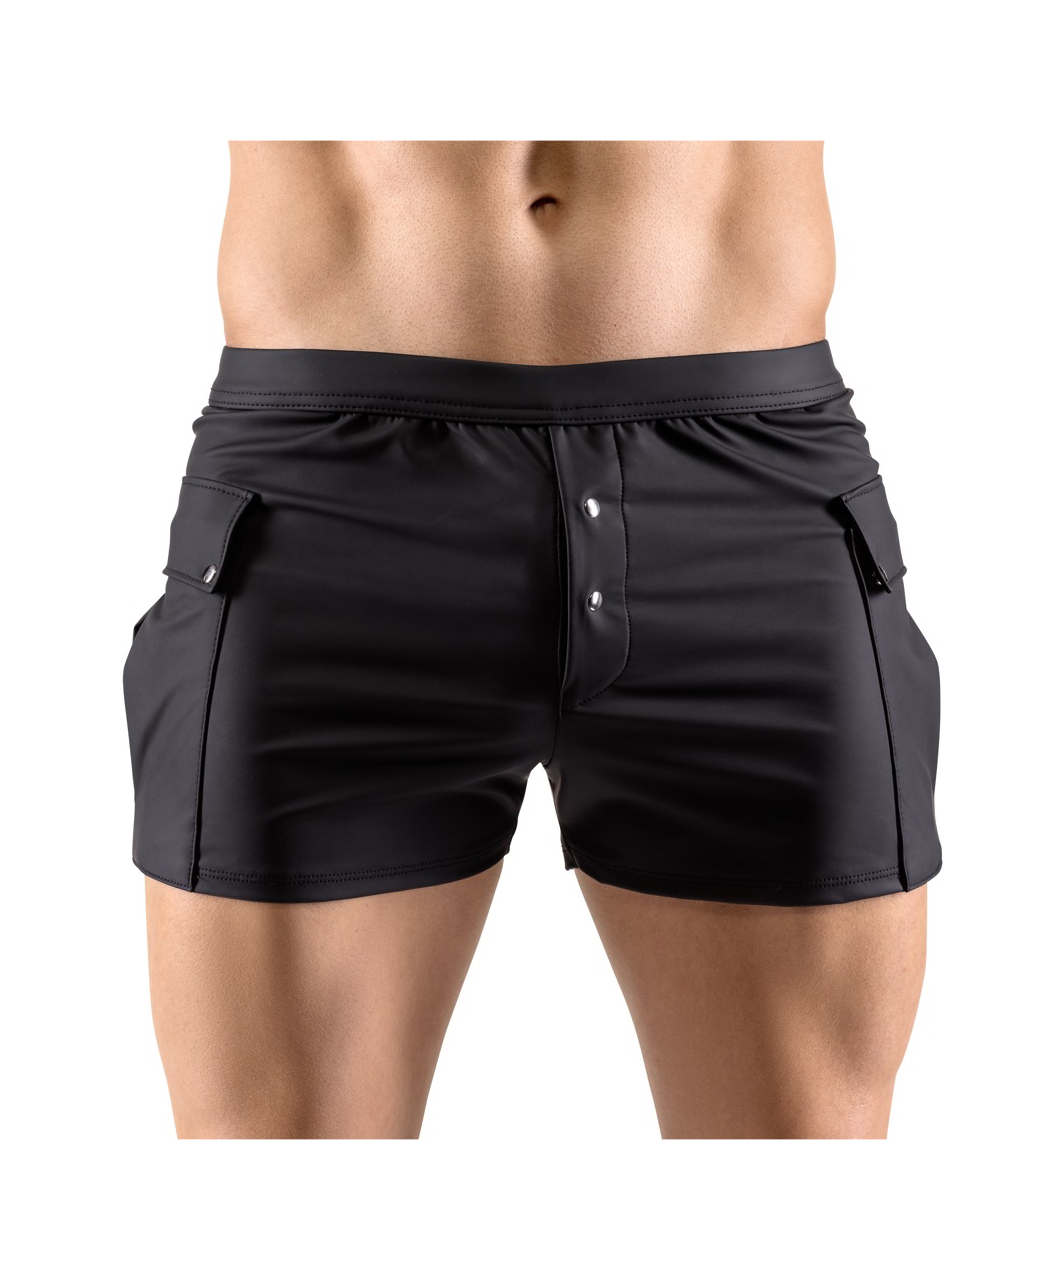 Svenjoyment black matte look shorts with pockets